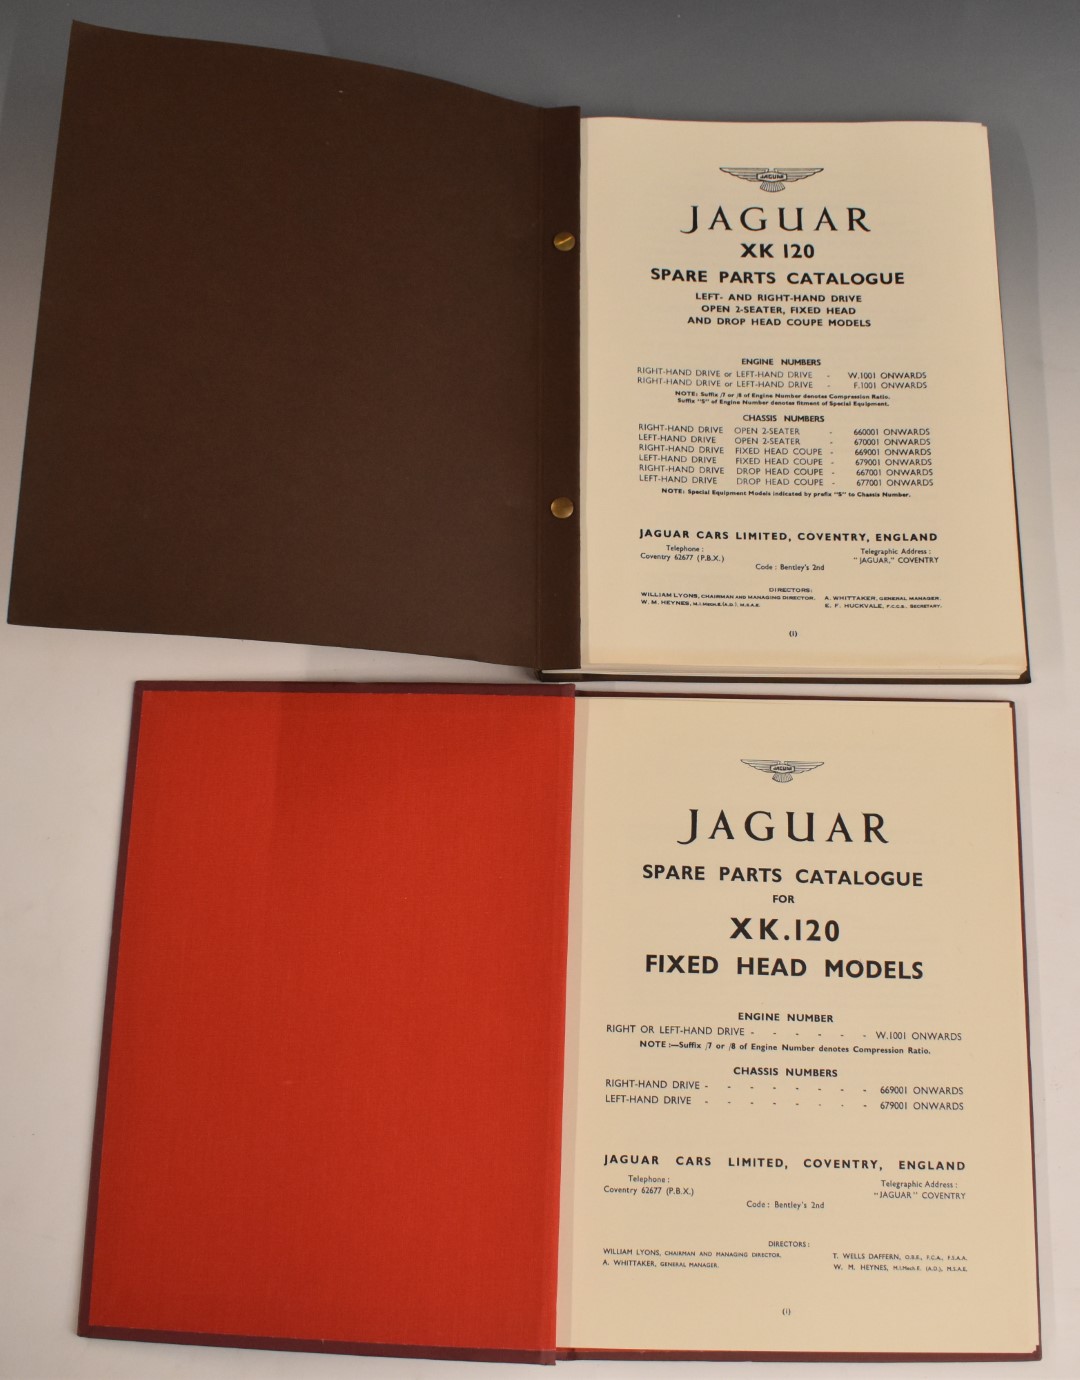 Jaguar XK 120 spare parts catalogue and a catalogue for the fixed head models, both Jaguar - Image 2 of 3